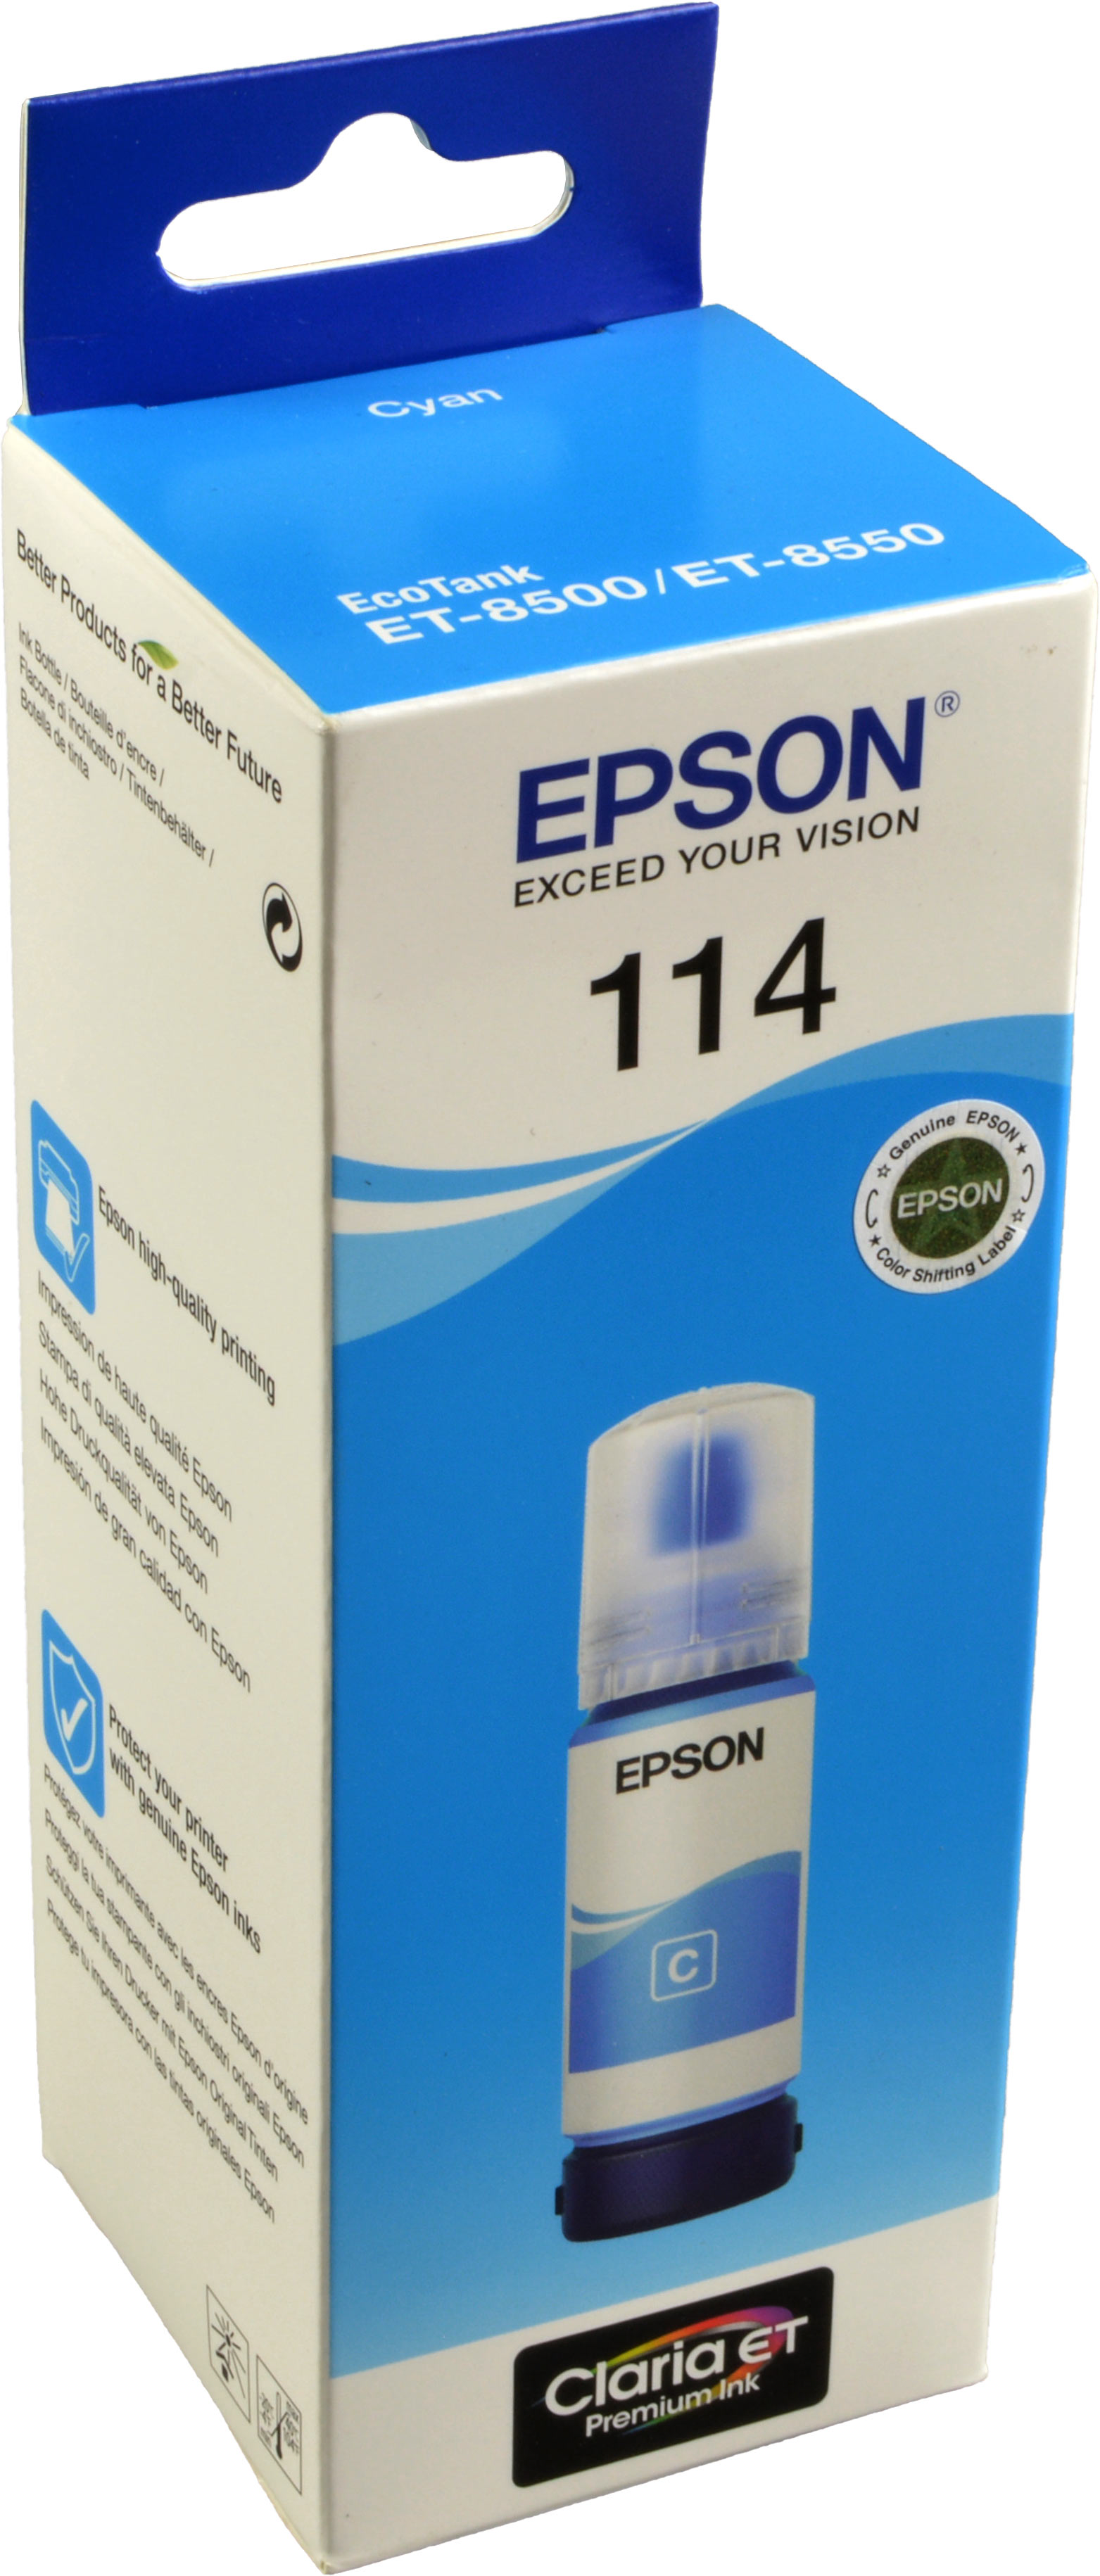 Epson Tinte C13T07B240  114  cyan  Nachfülltinte